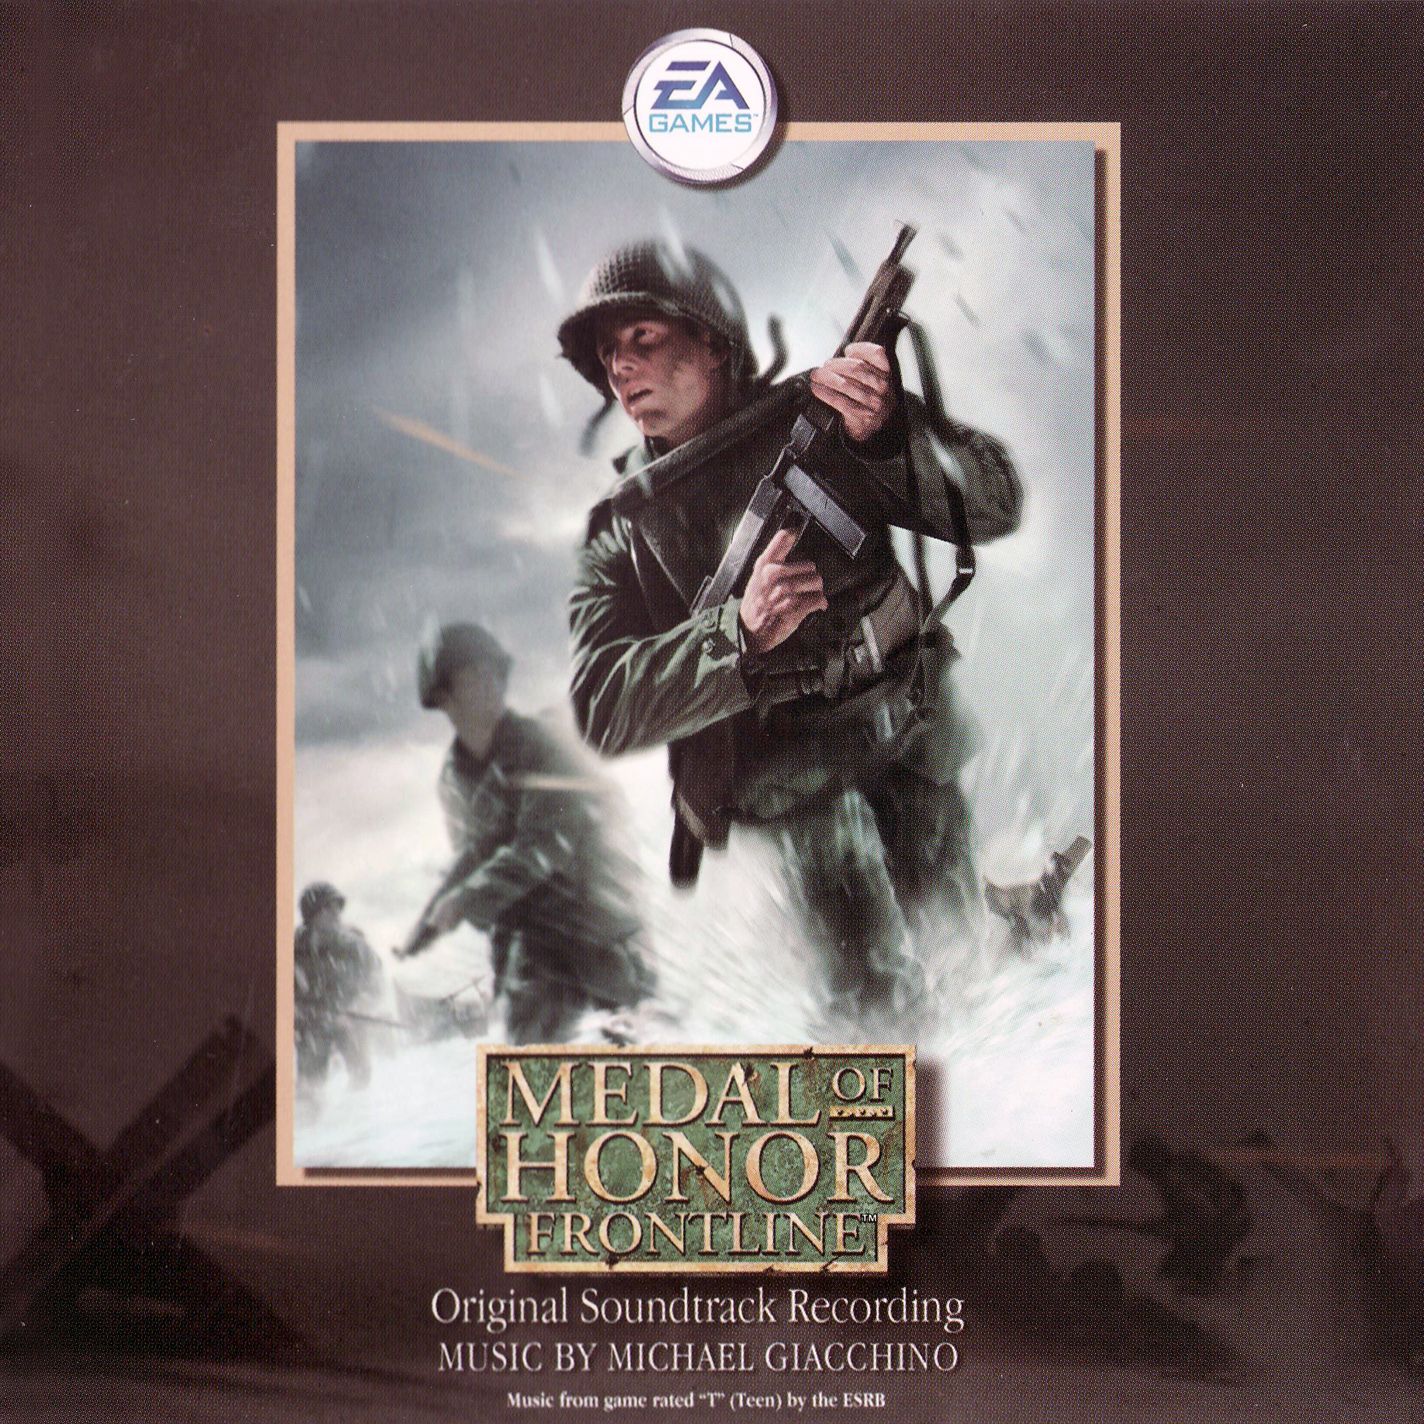 Medal of Honor: Frontline: Original Soundtrack Recording album art